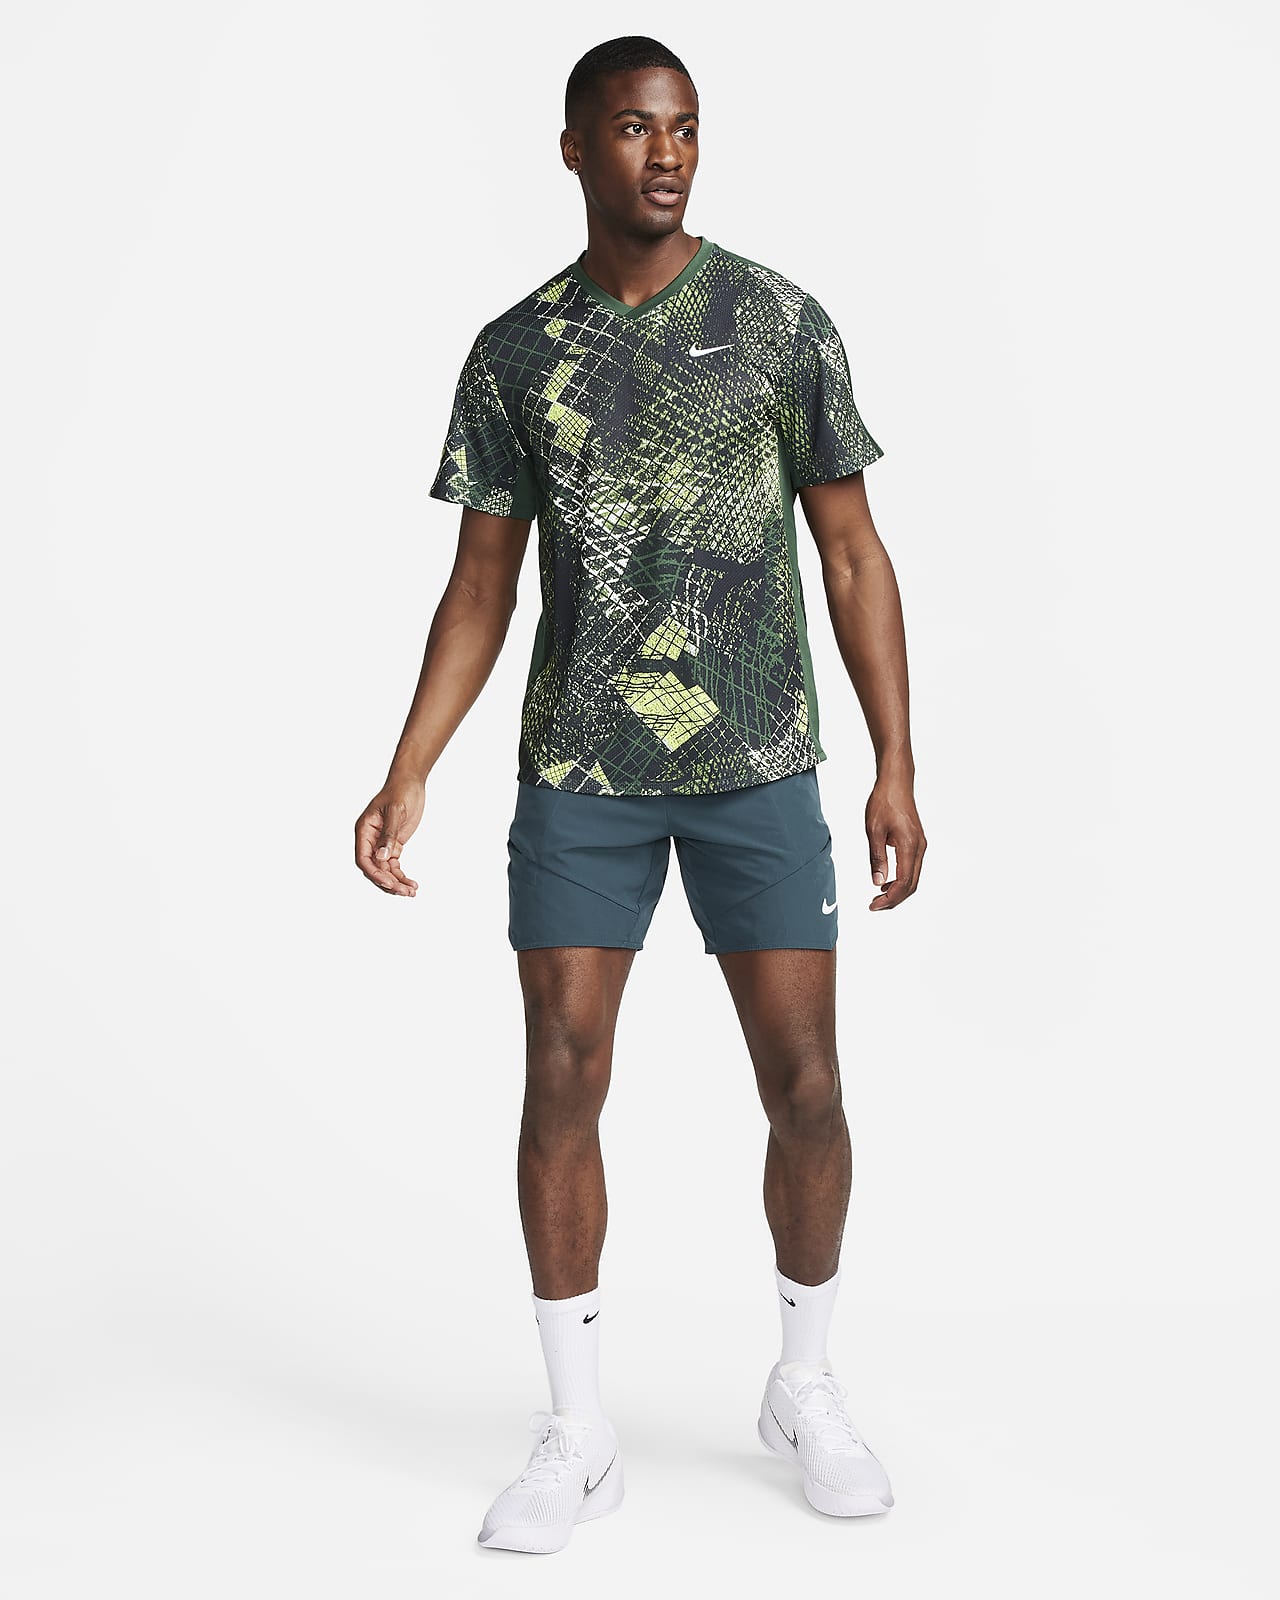 Buy Nike Dri-Fit Advantage Rafa 7in Shorts Men Neon Green online